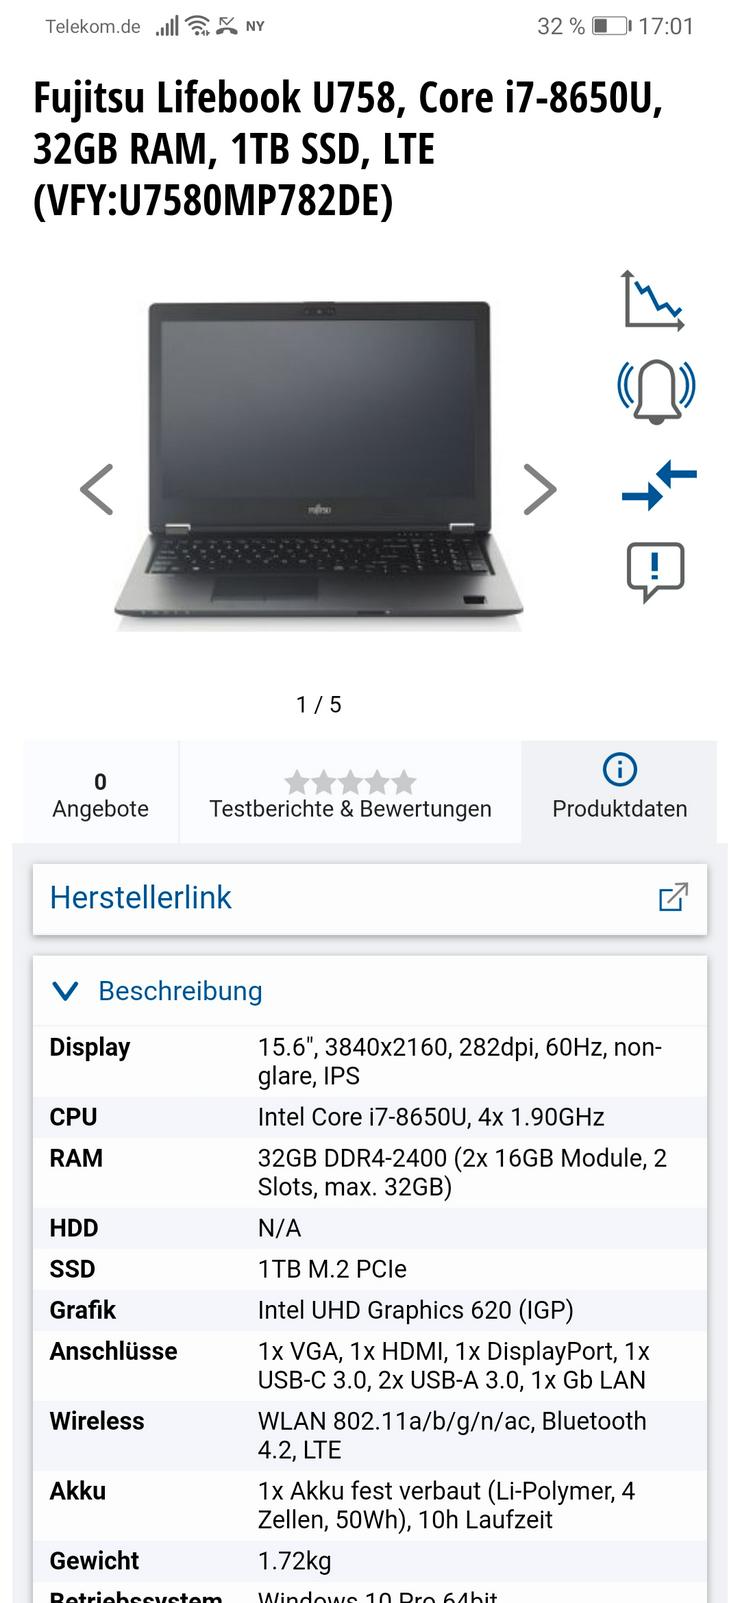  Fujitsu Lifebook U758, Core i7-8650U, 32GB RAM, 1TB SSD - Notebooks & Netbooks - Bild 3